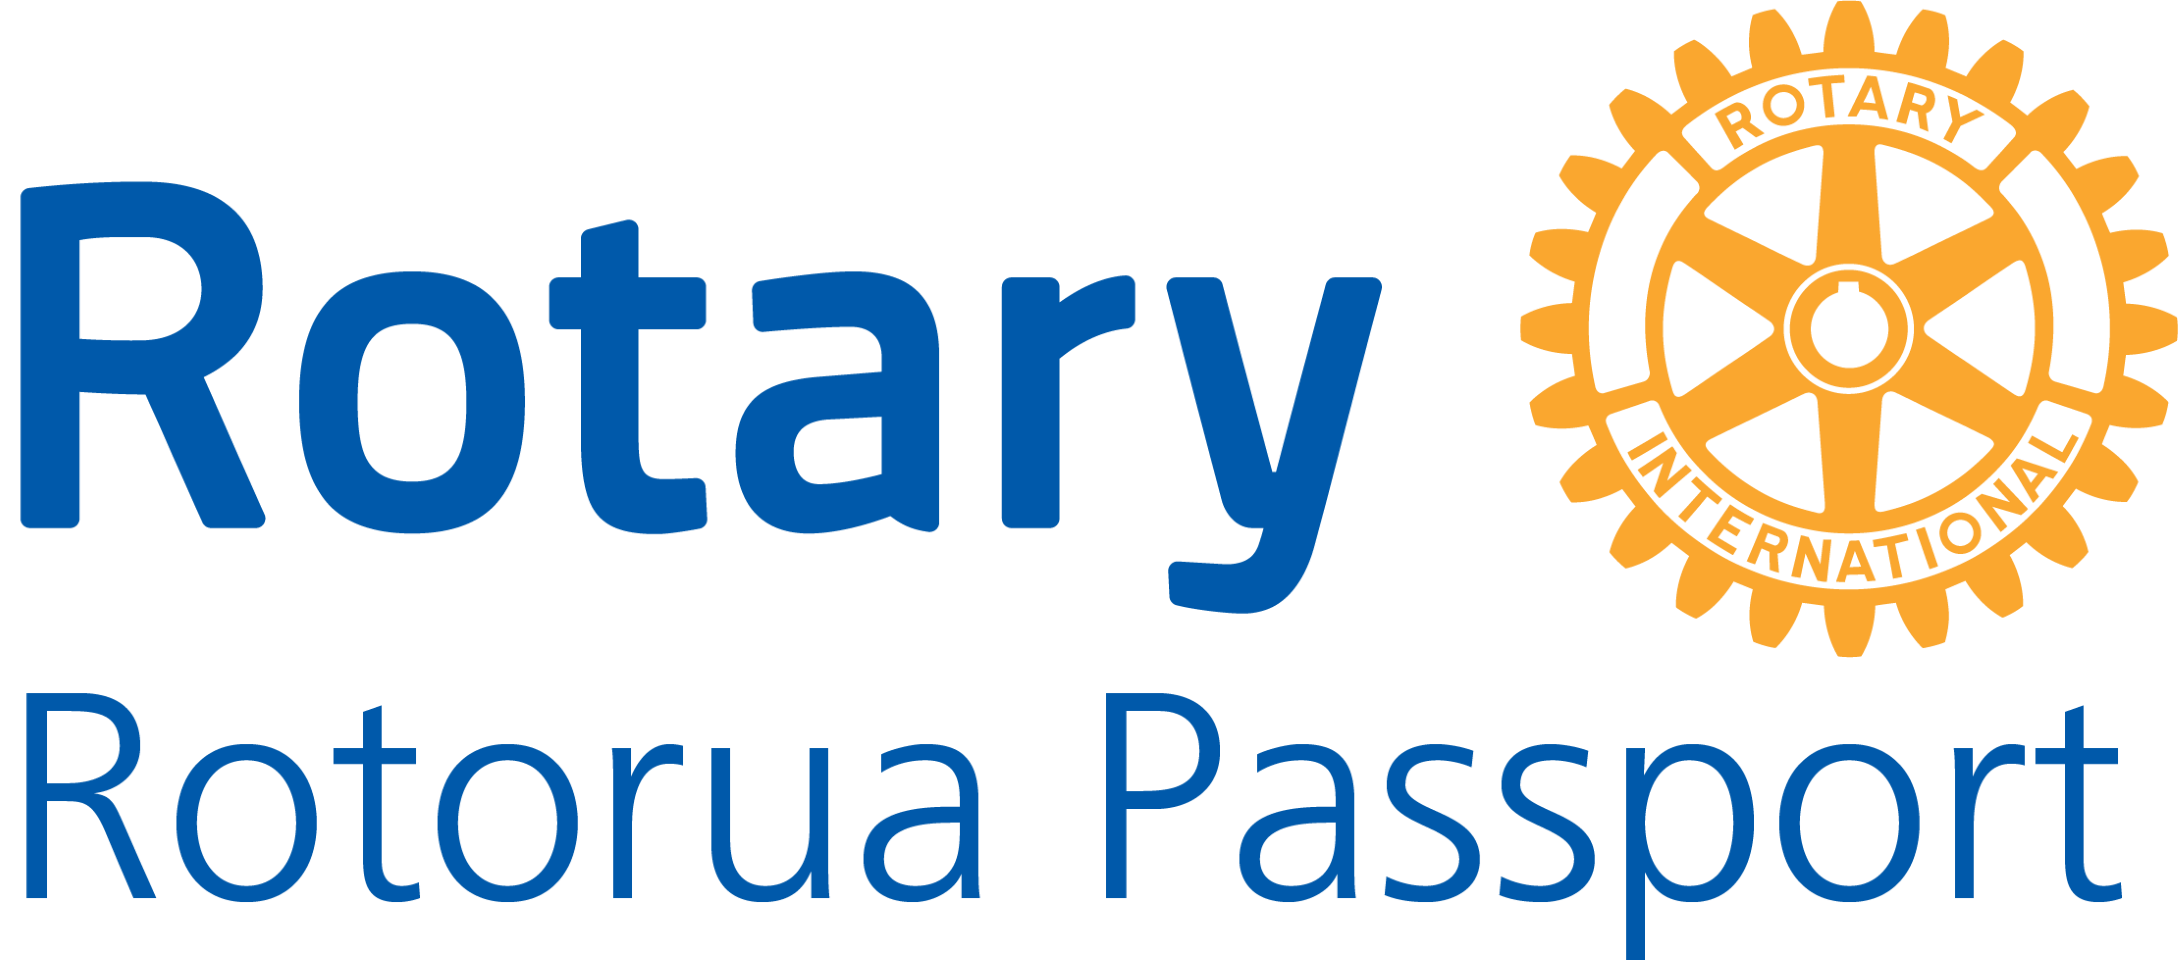 thumbnail Rotorua Passport Rotary Passport 1